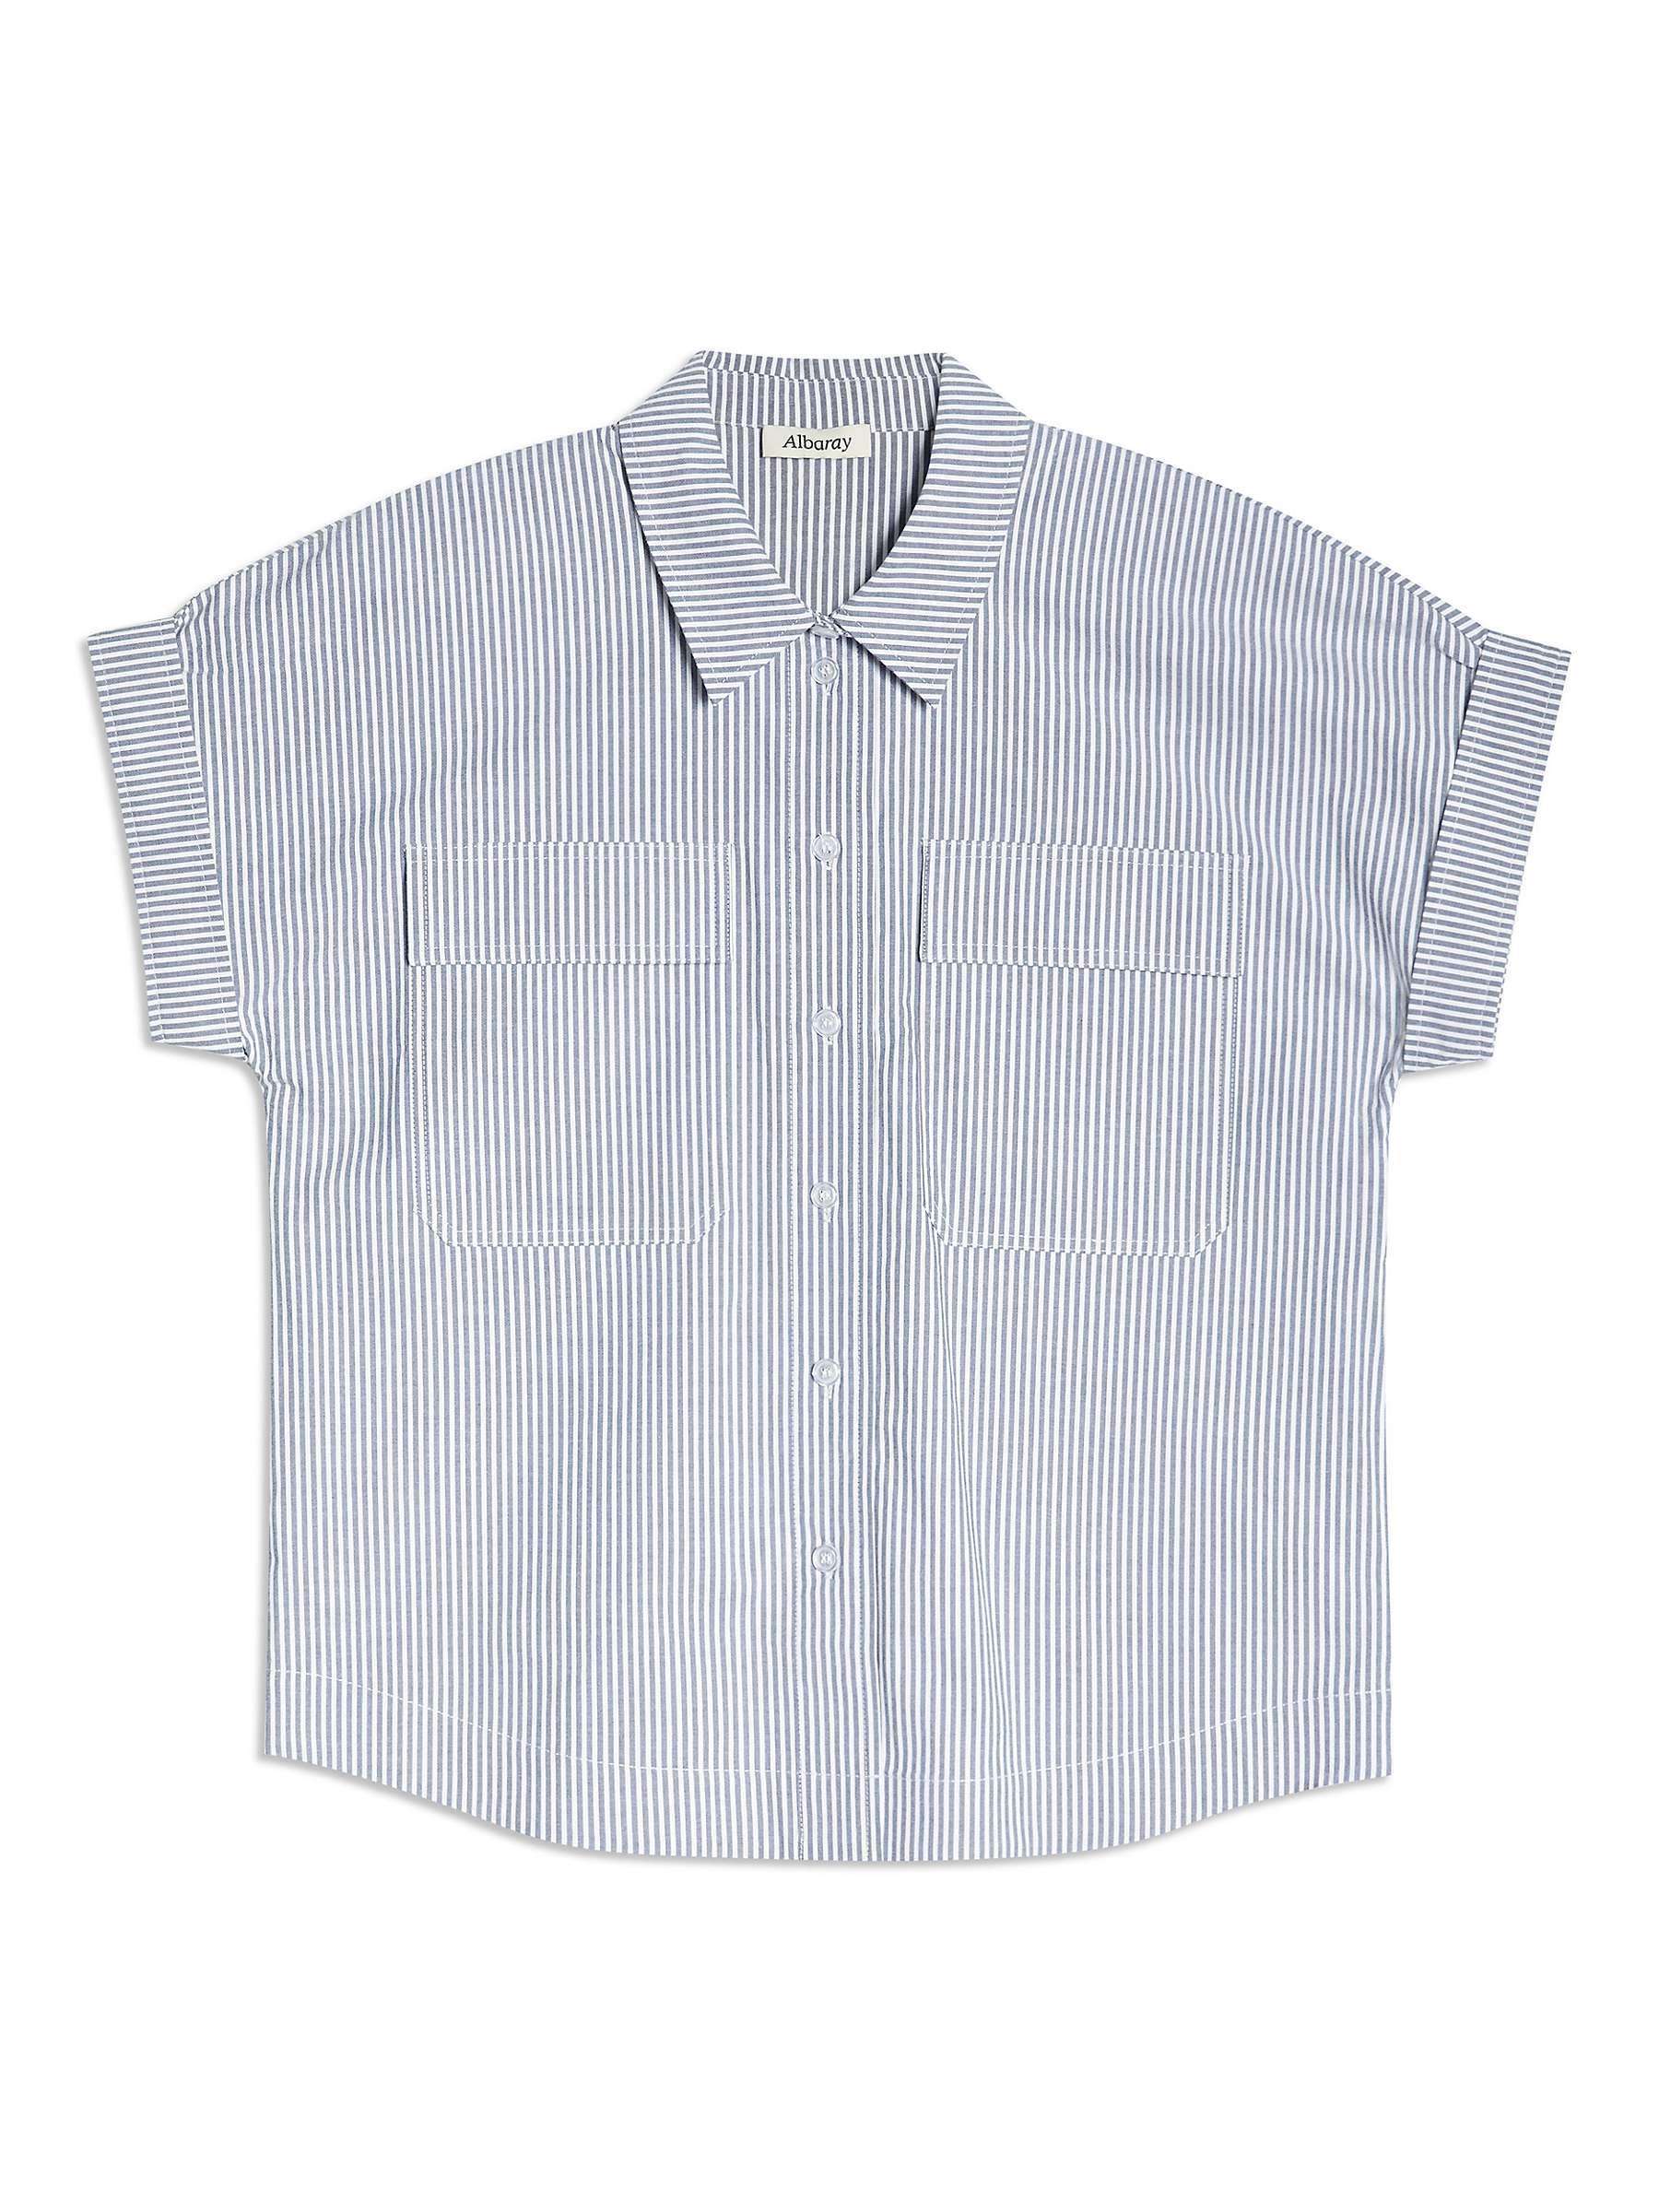 Buy Albaray Ticking Stripe Boxy Shirt, Blue/White Online at johnlewis.com